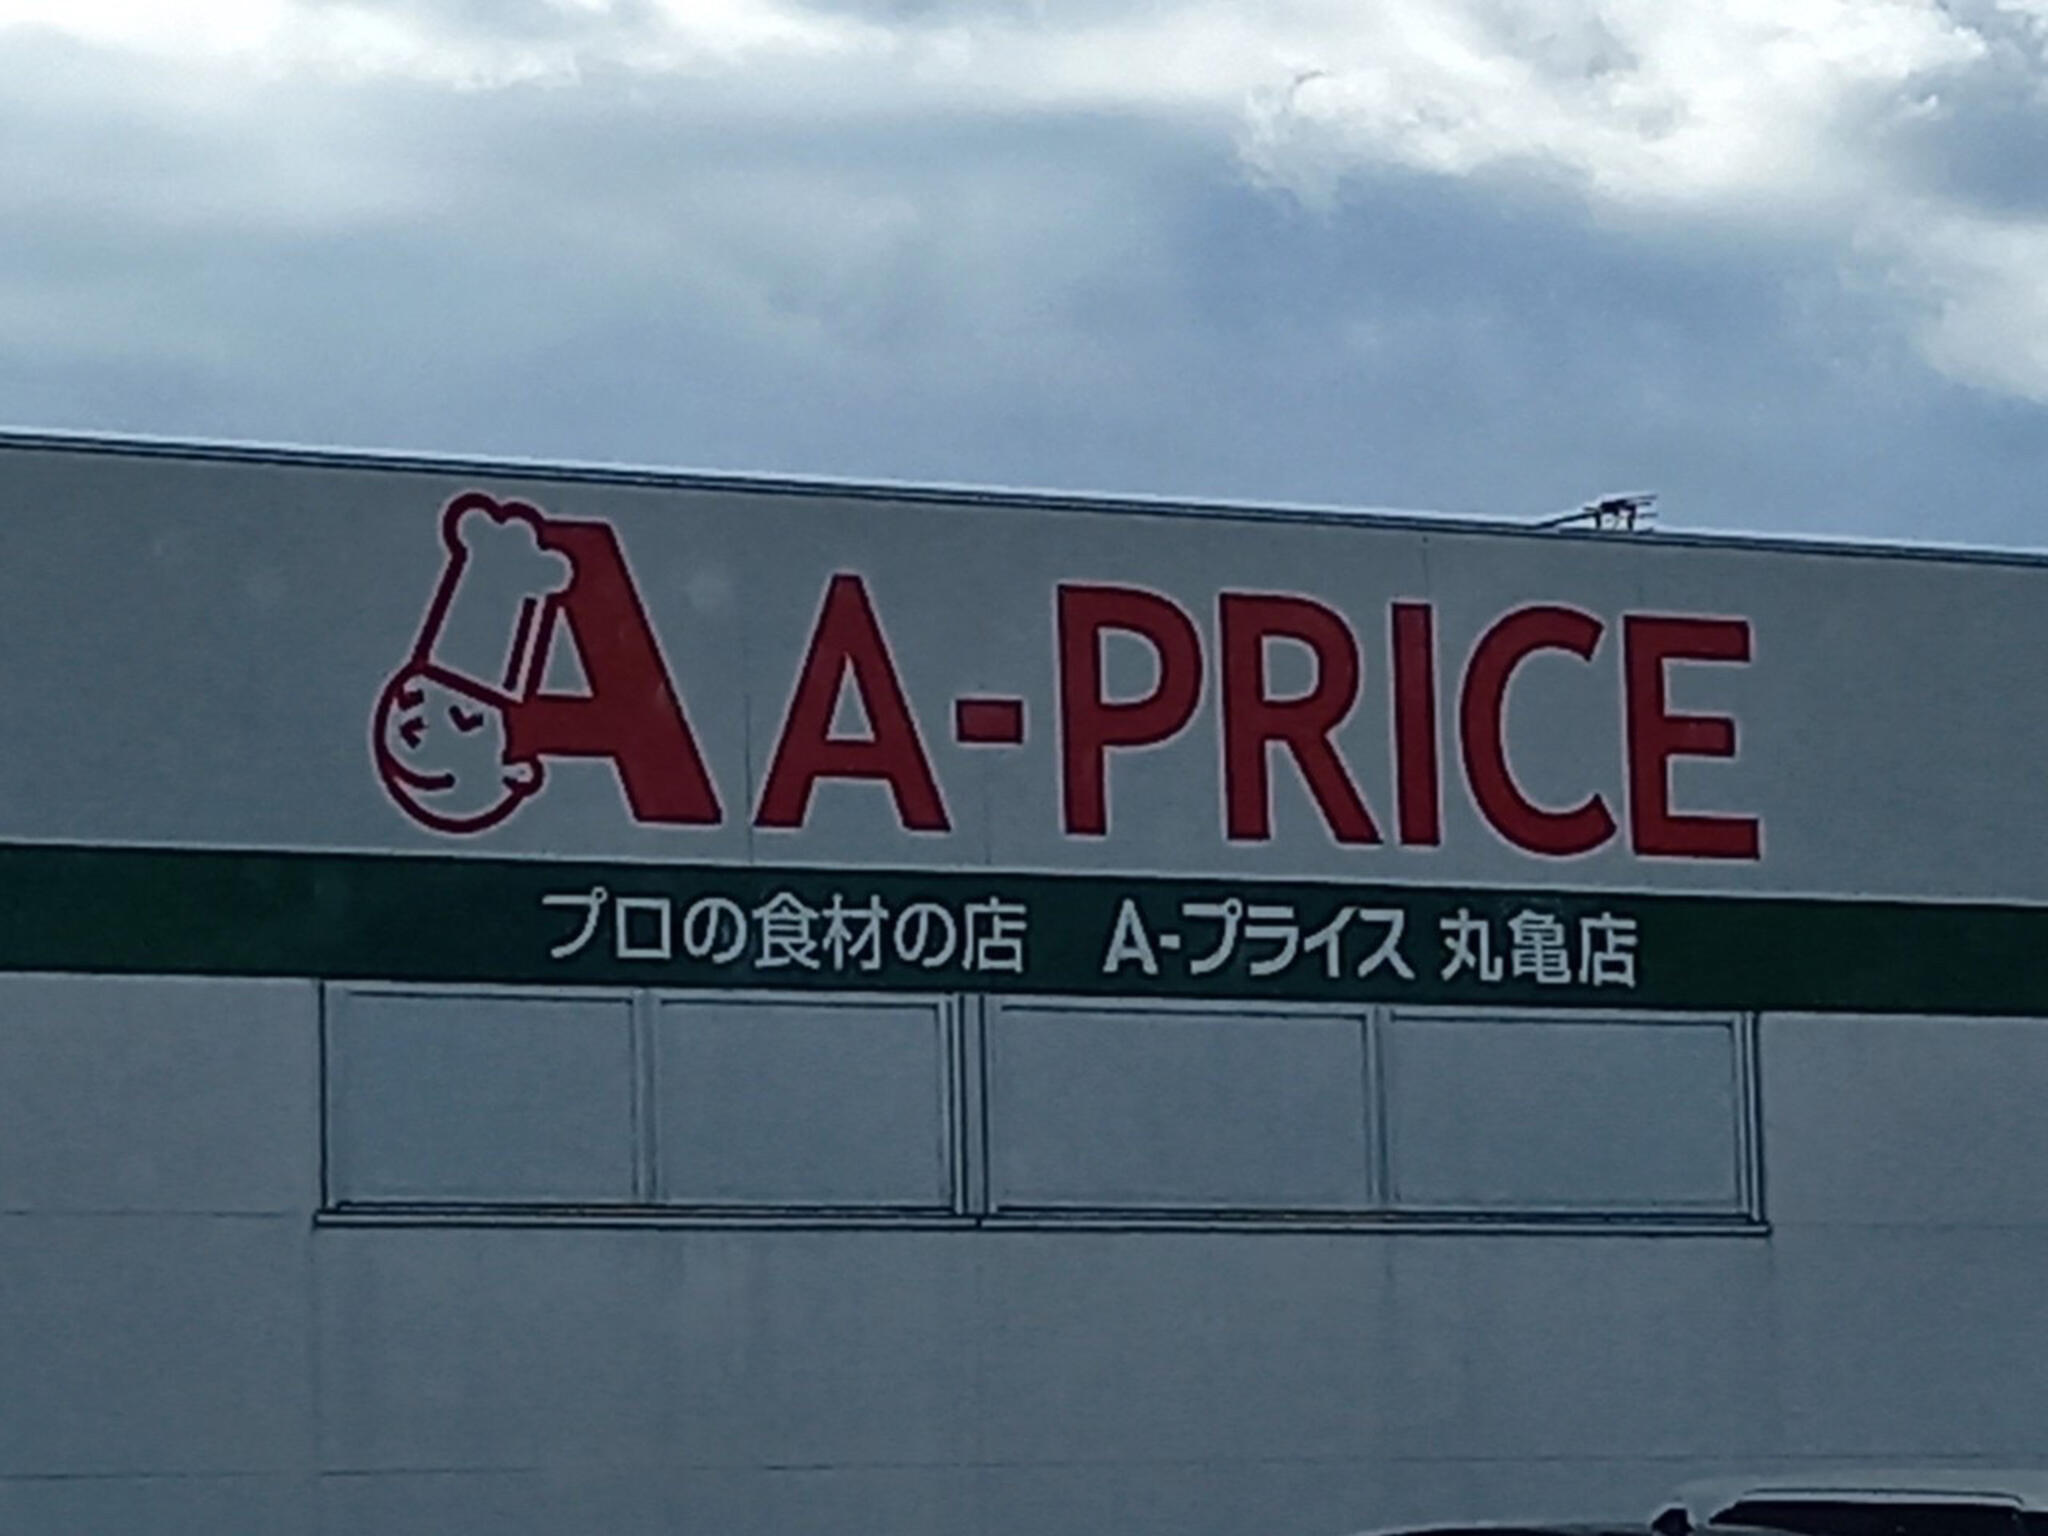 A-プライス 丸亀店の代表写真2